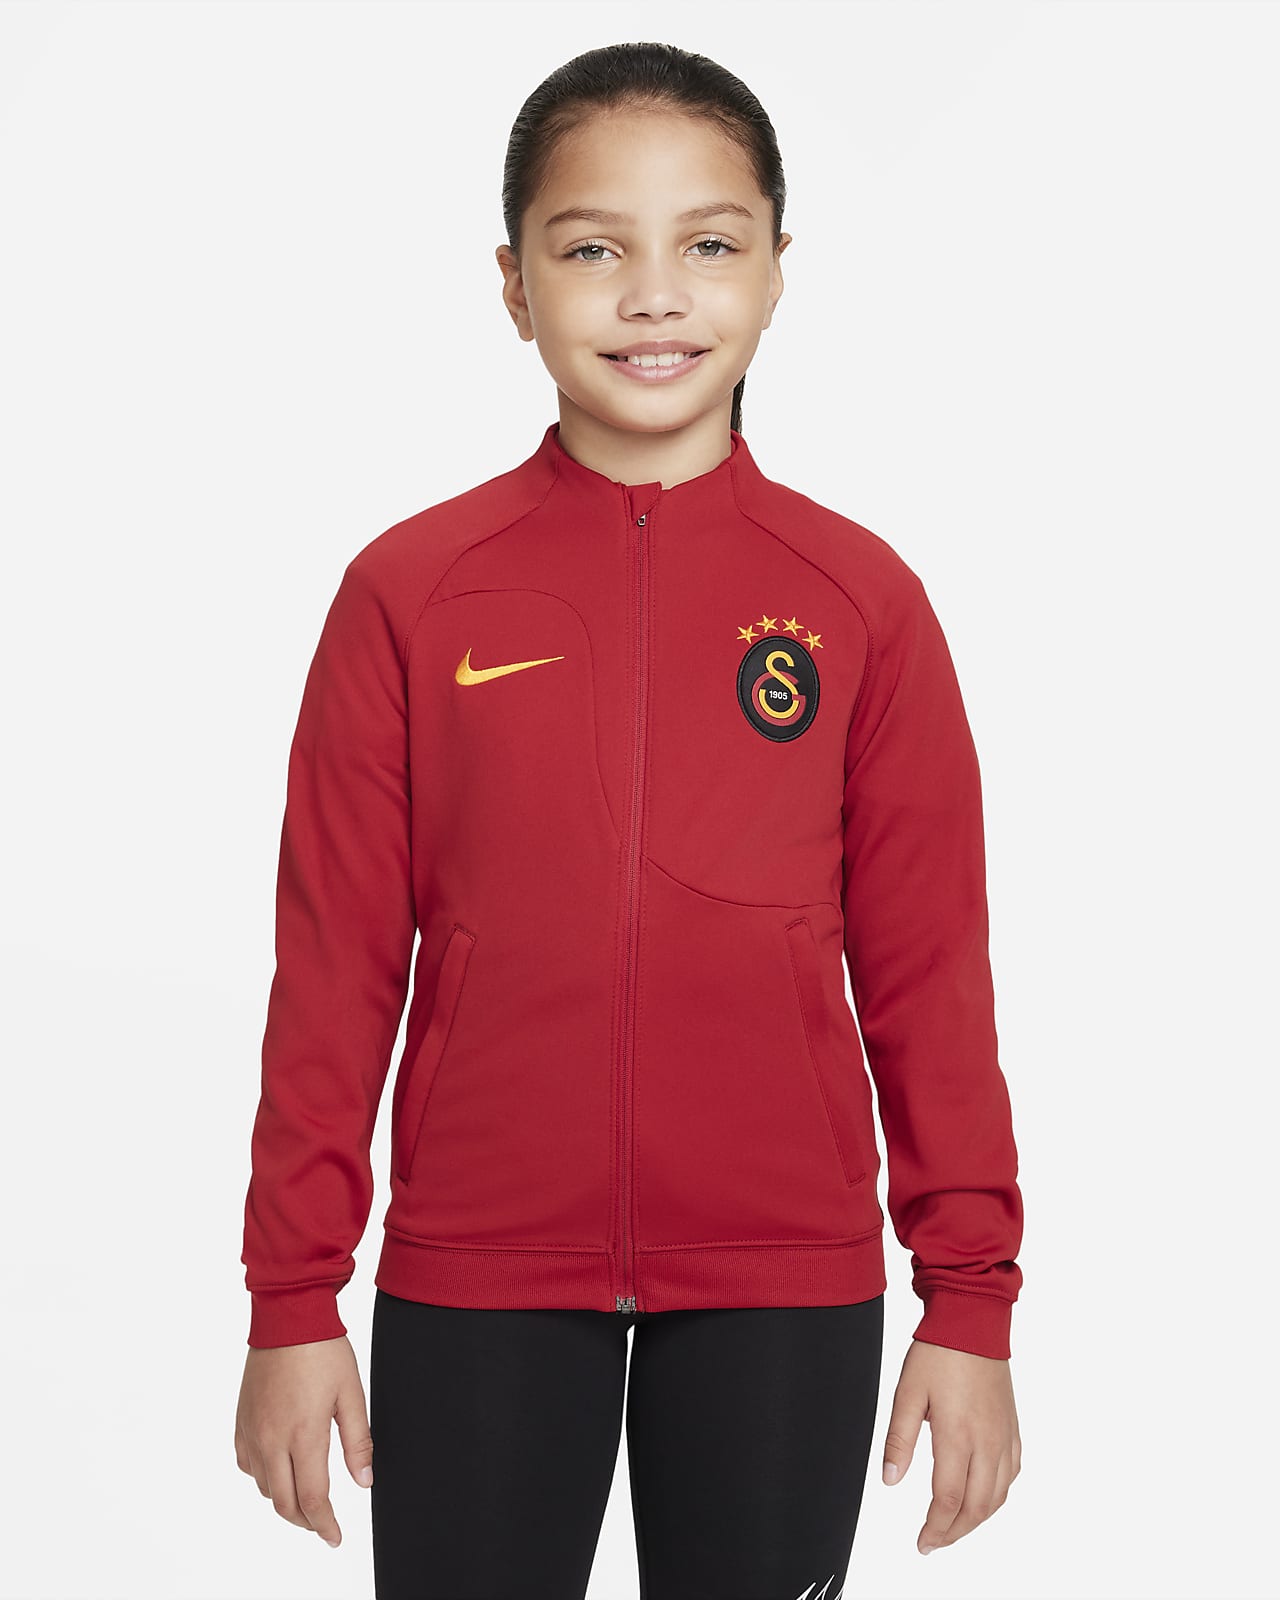 Galatasaray Academy Pro Nike voetbaljack voor kids